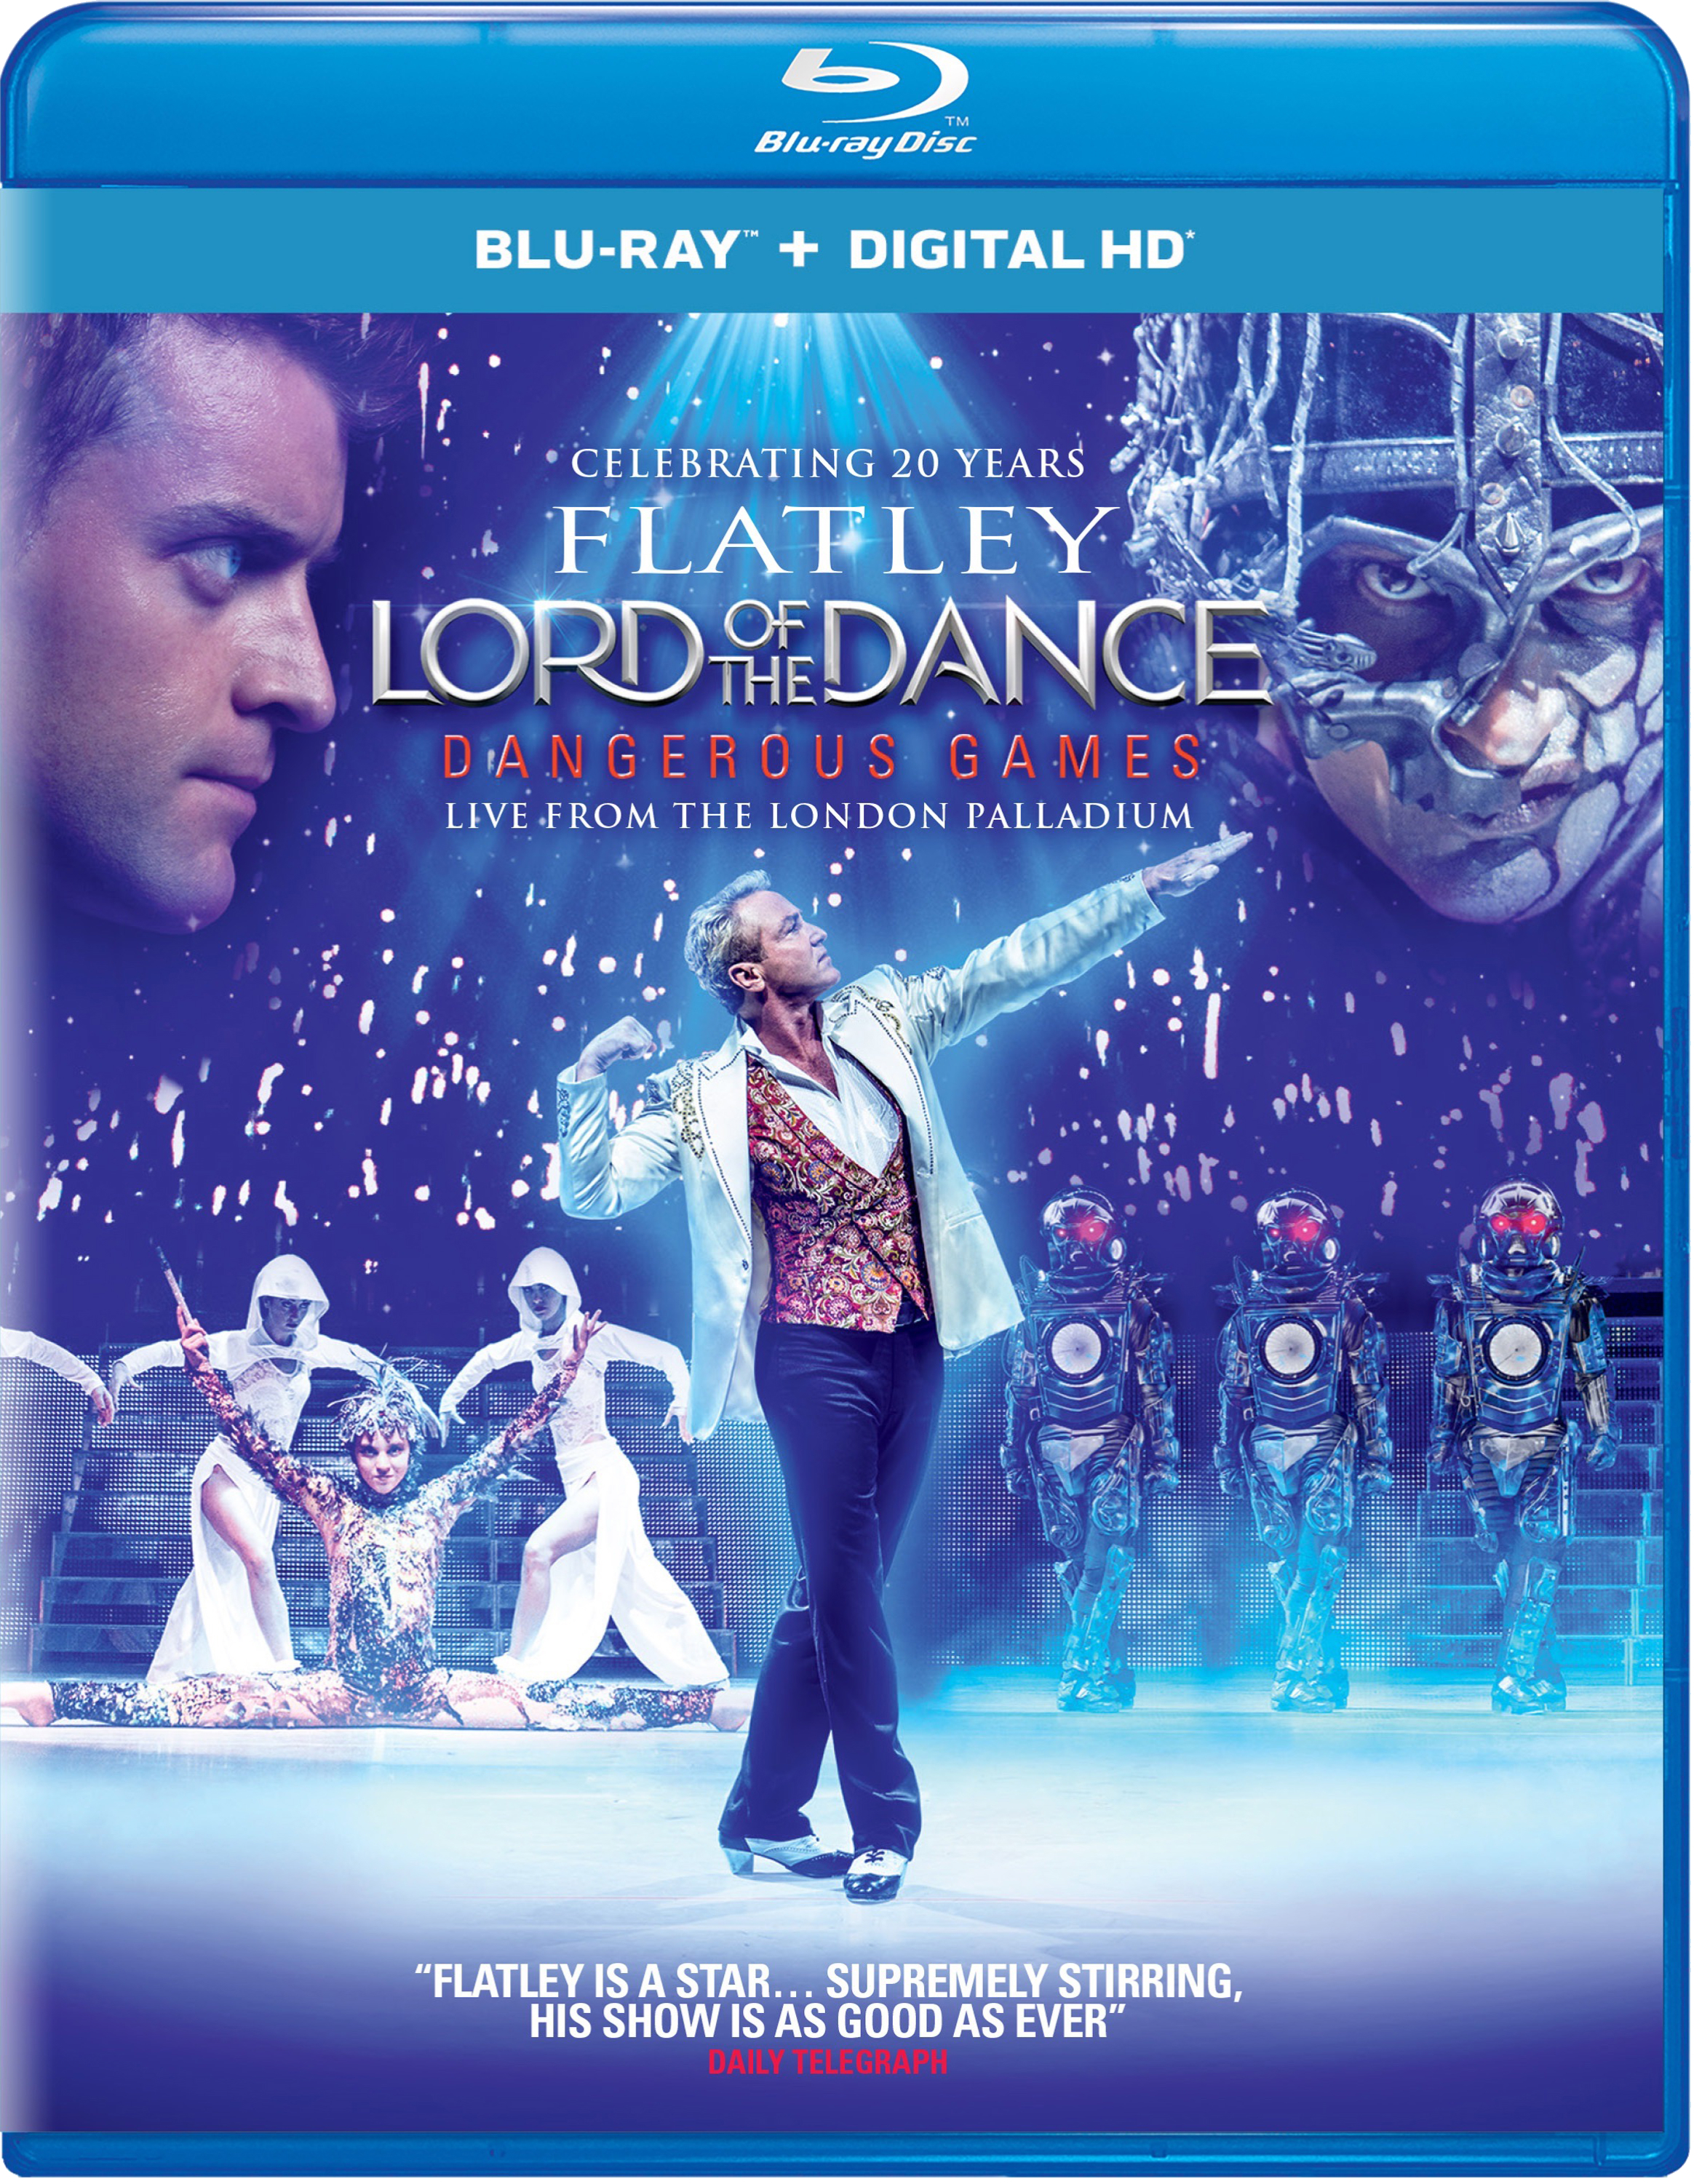 Lord Of The Dance: Dangerous Games (Blu-ray + Digital HD) - Blu-ray [ 2014 ]  - Dance Music On Blu-ray